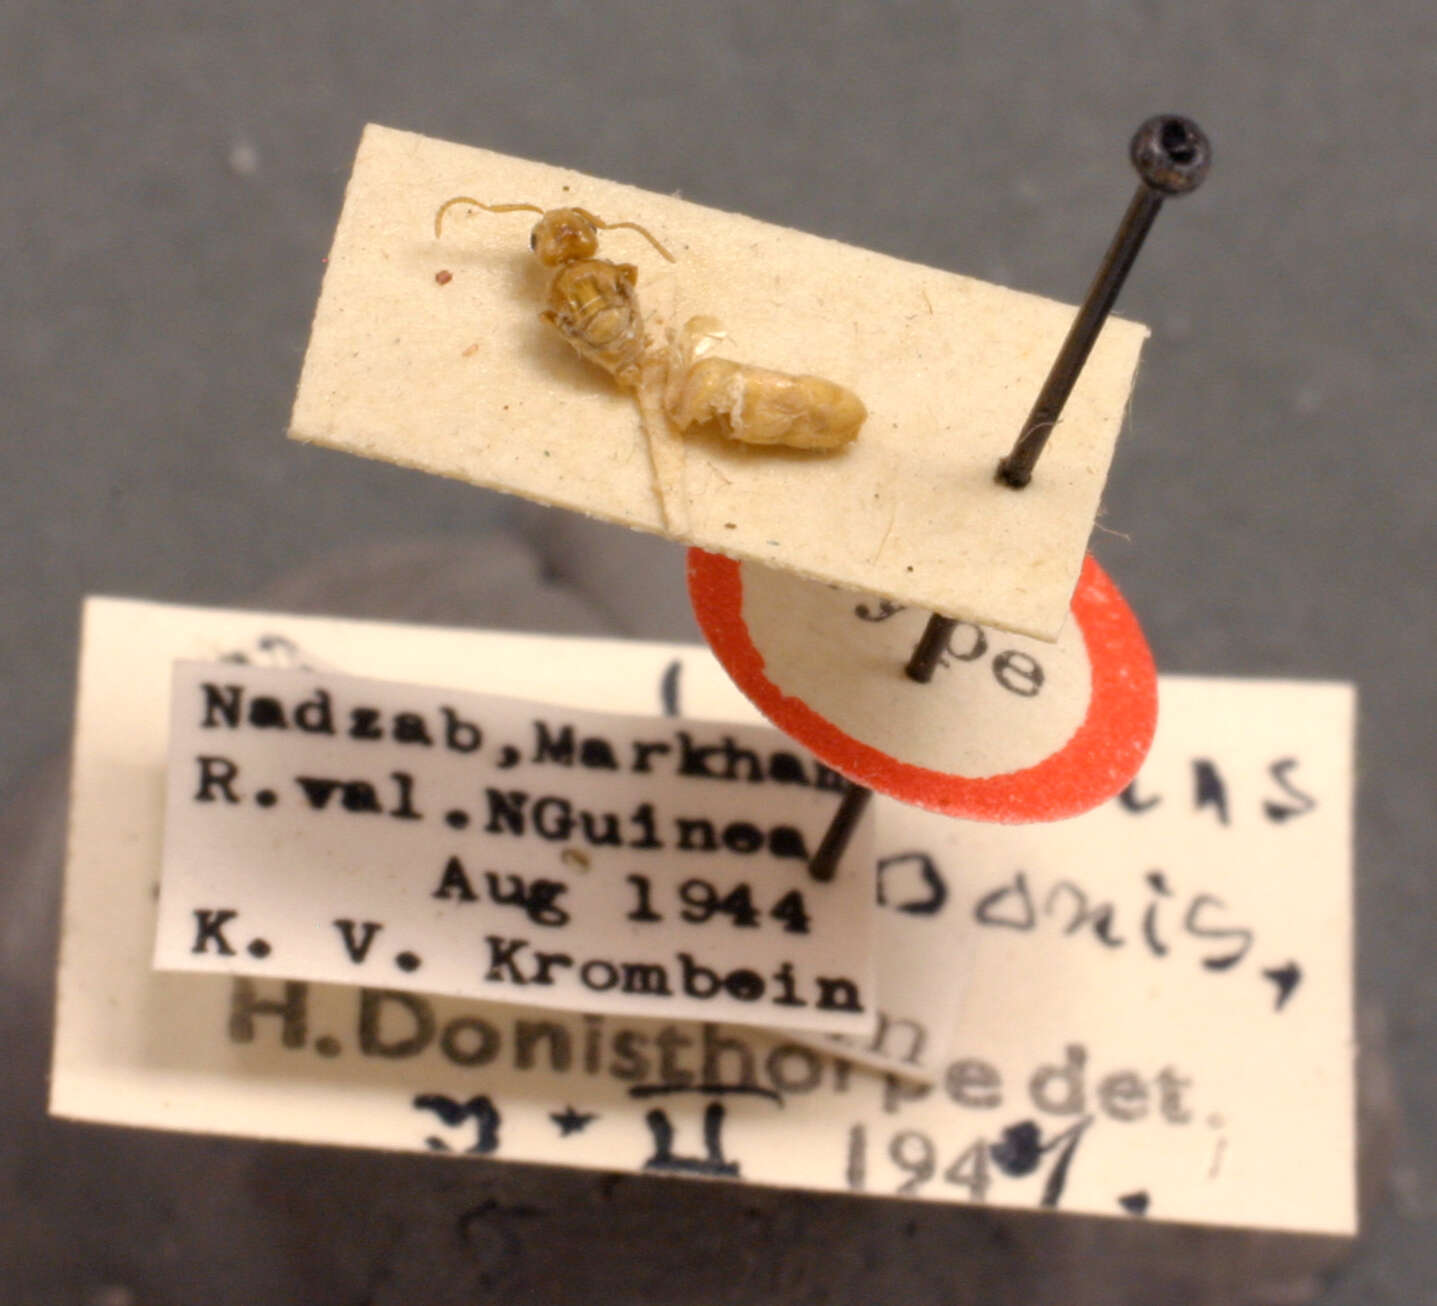 Sivun Pseudolasius minor Donisthorpe 1947 kuva